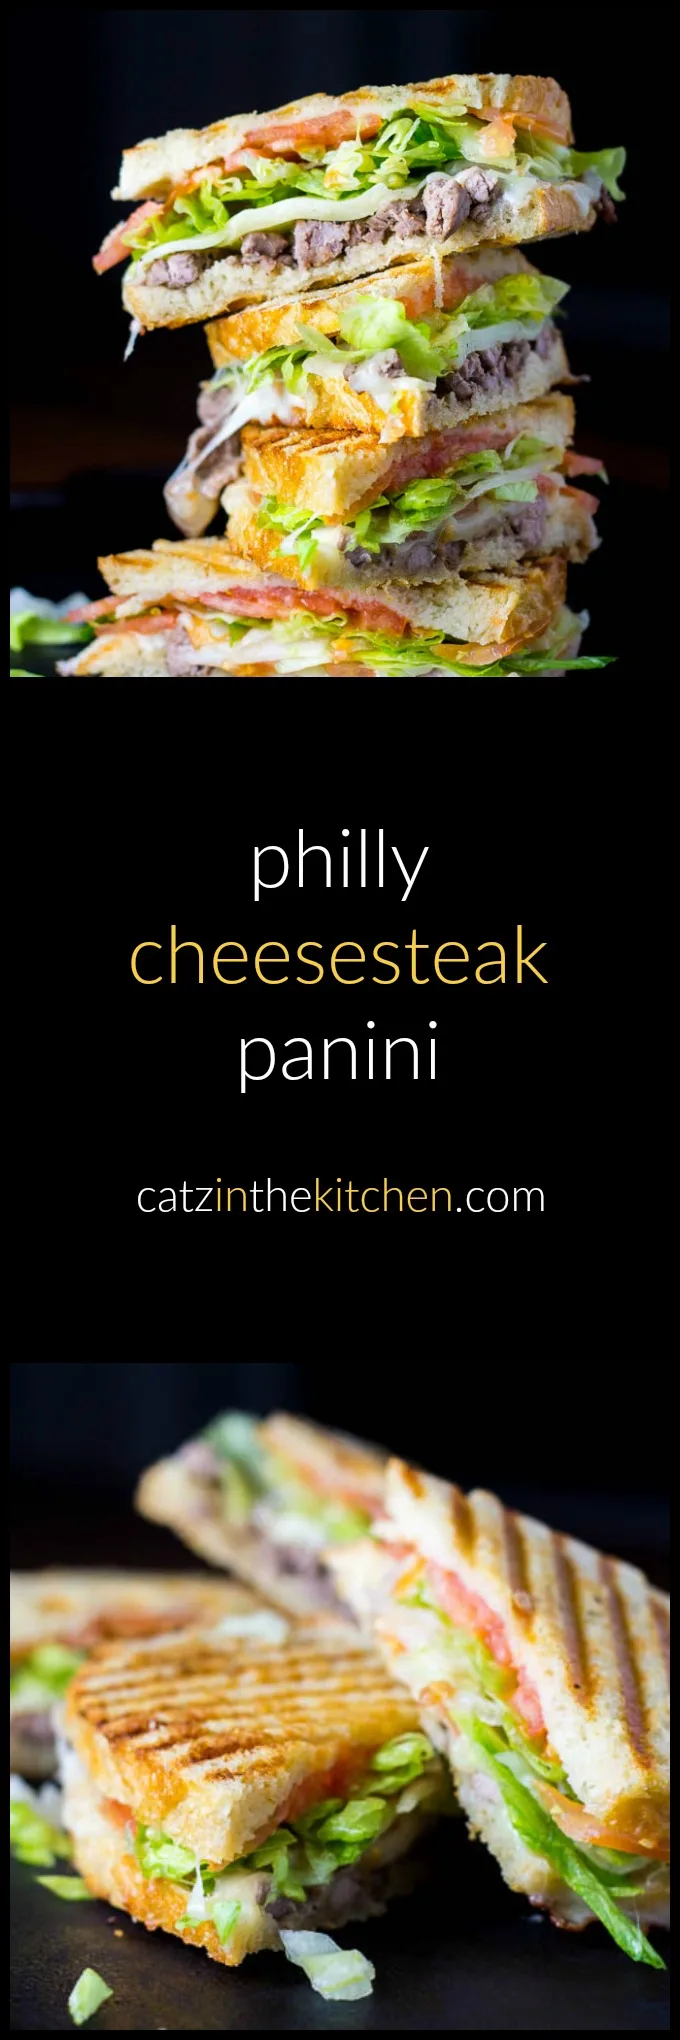 Philly Cheesesteak Panini | Catz in the Kitchen | catzinthekitchen.com | #philly #cheesesteak #panini #recipe